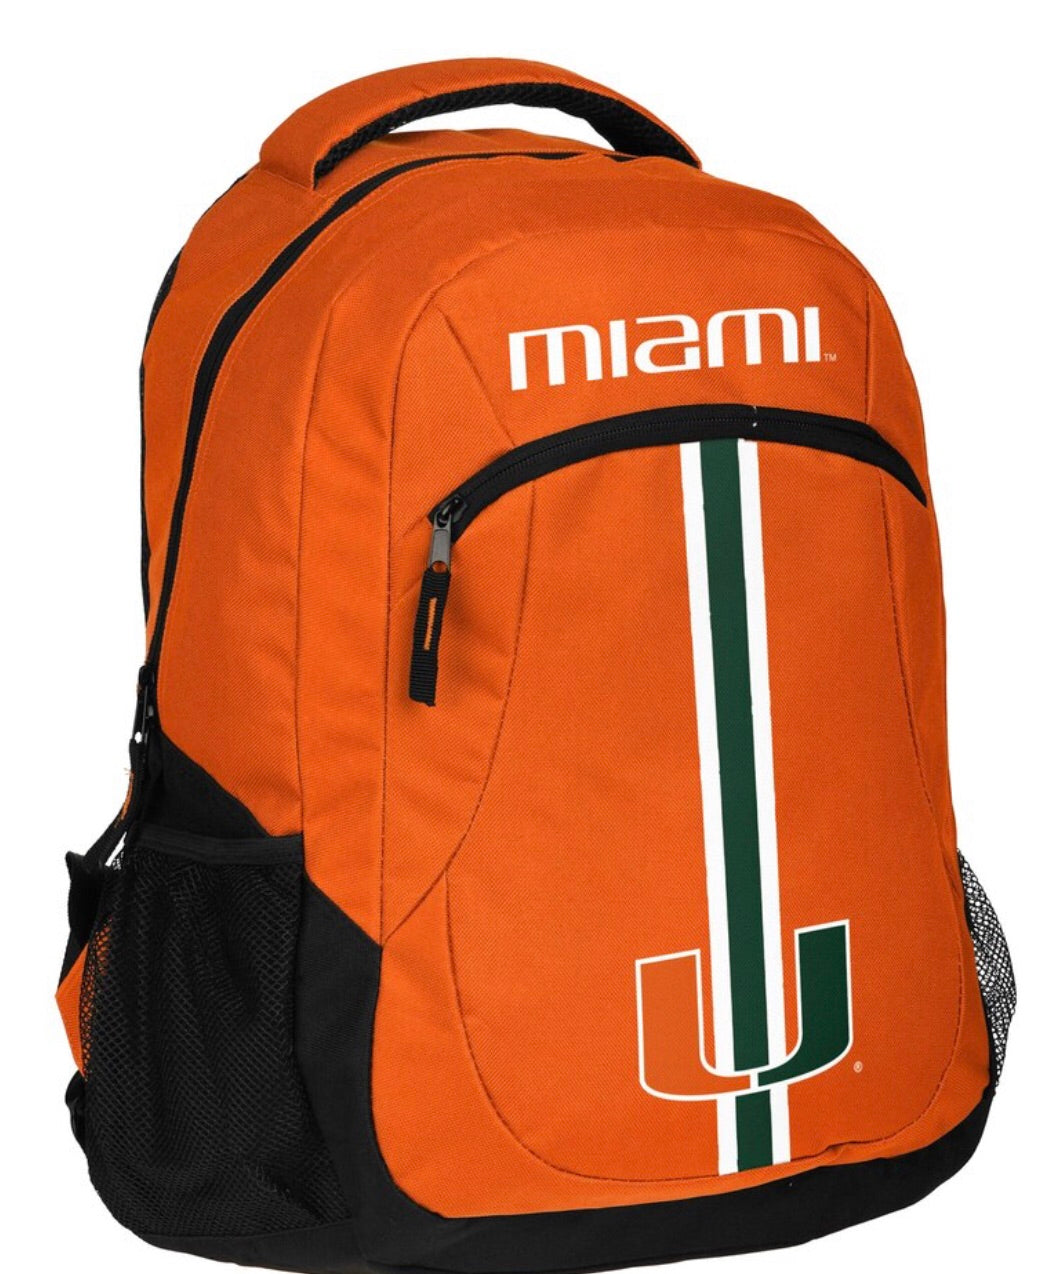 Backpacks at City Gear Miami! 🎒